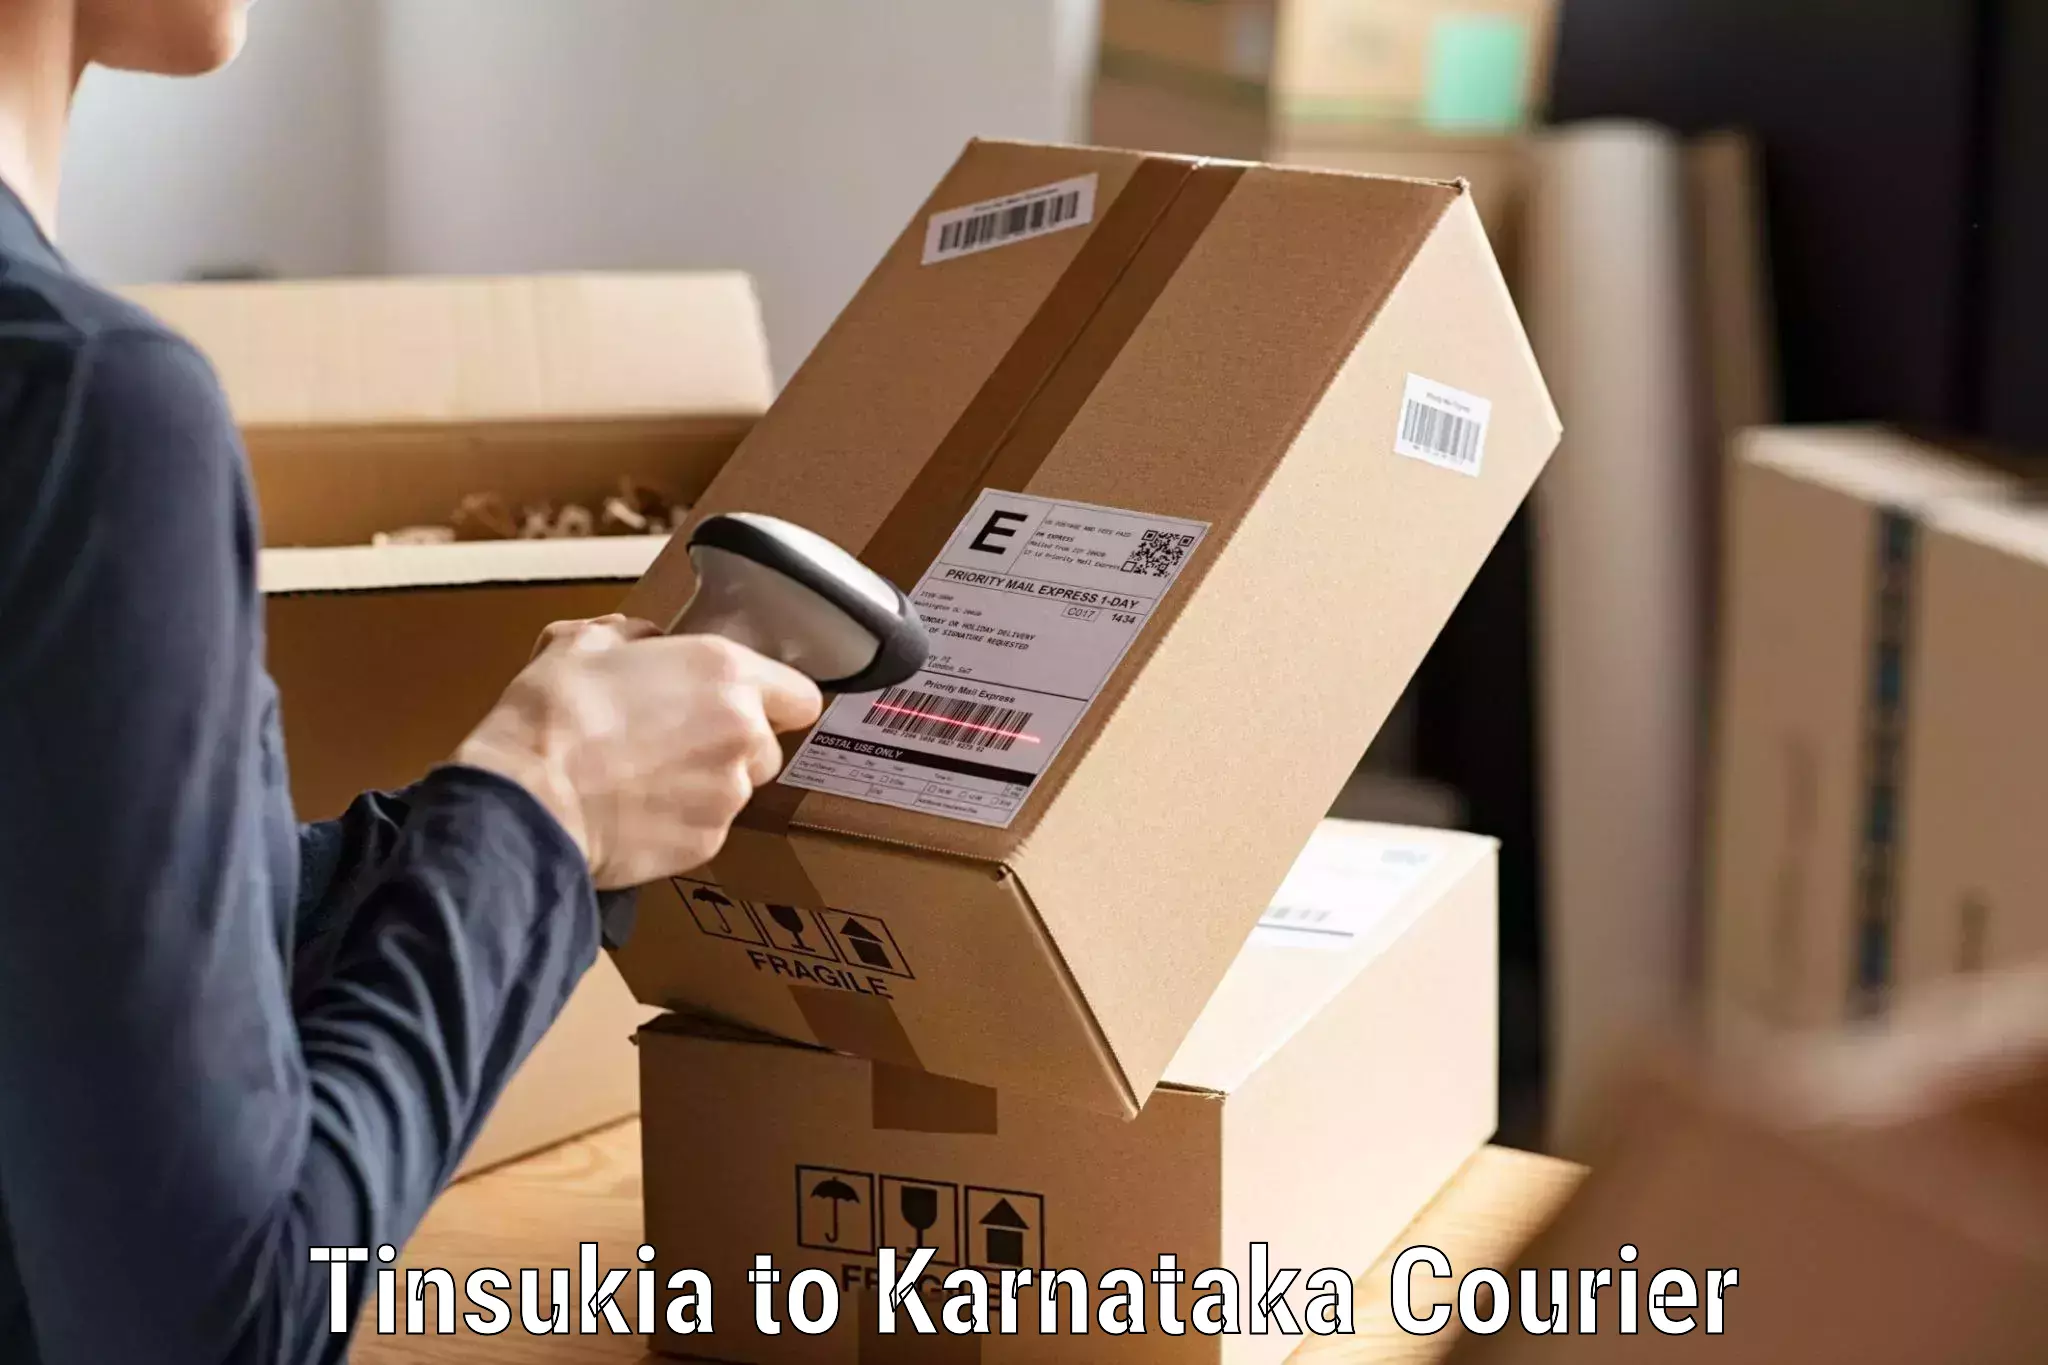 Digital courier platforms Tinsukia to Kollegal